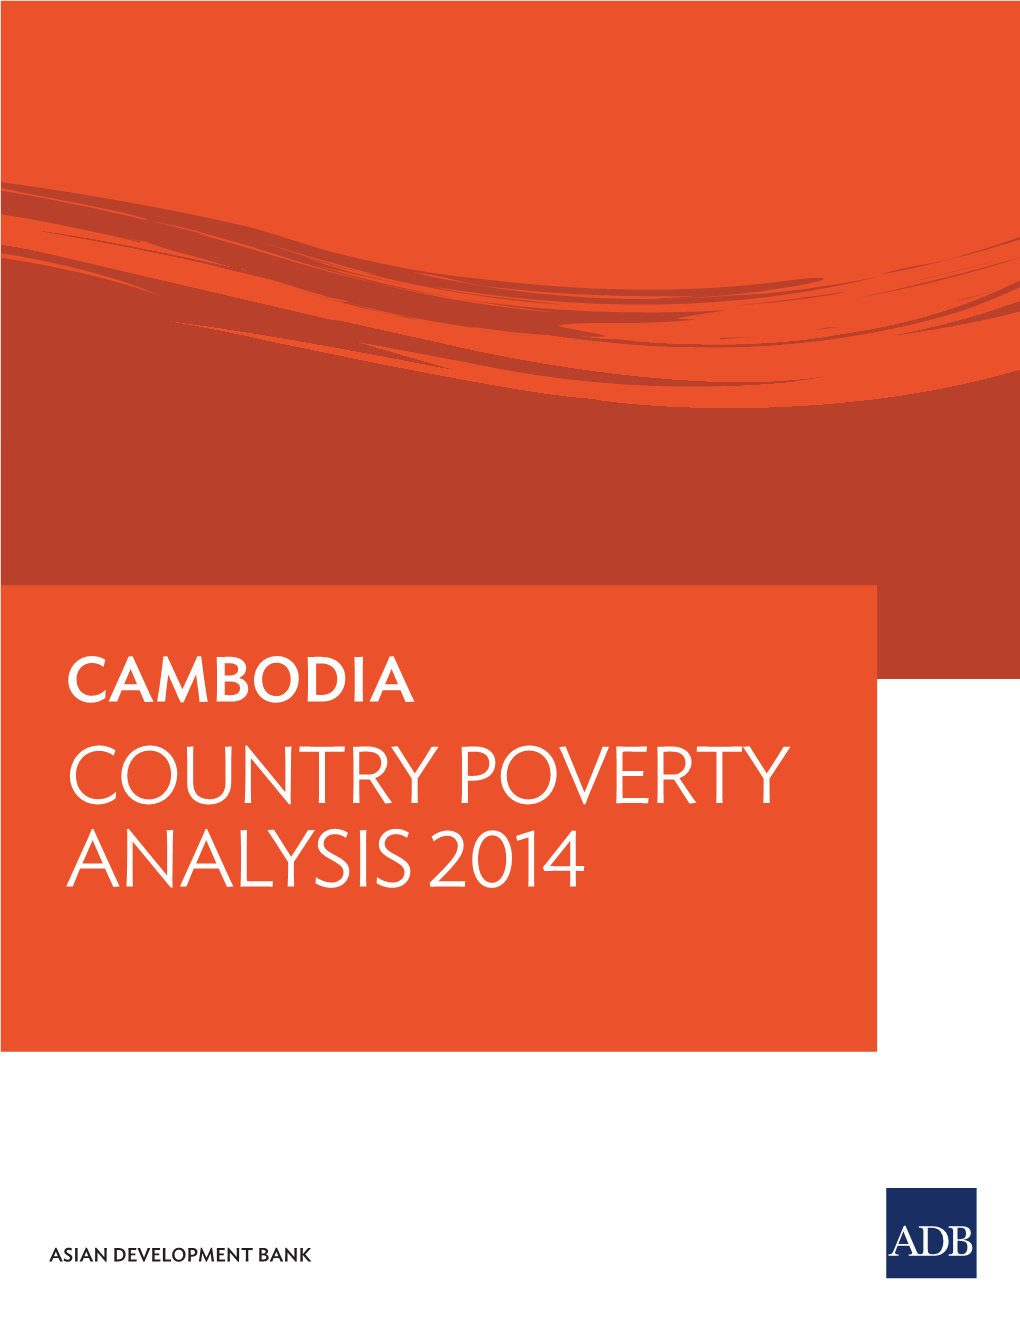 Cambodia: Country Poverty Analysis 2014